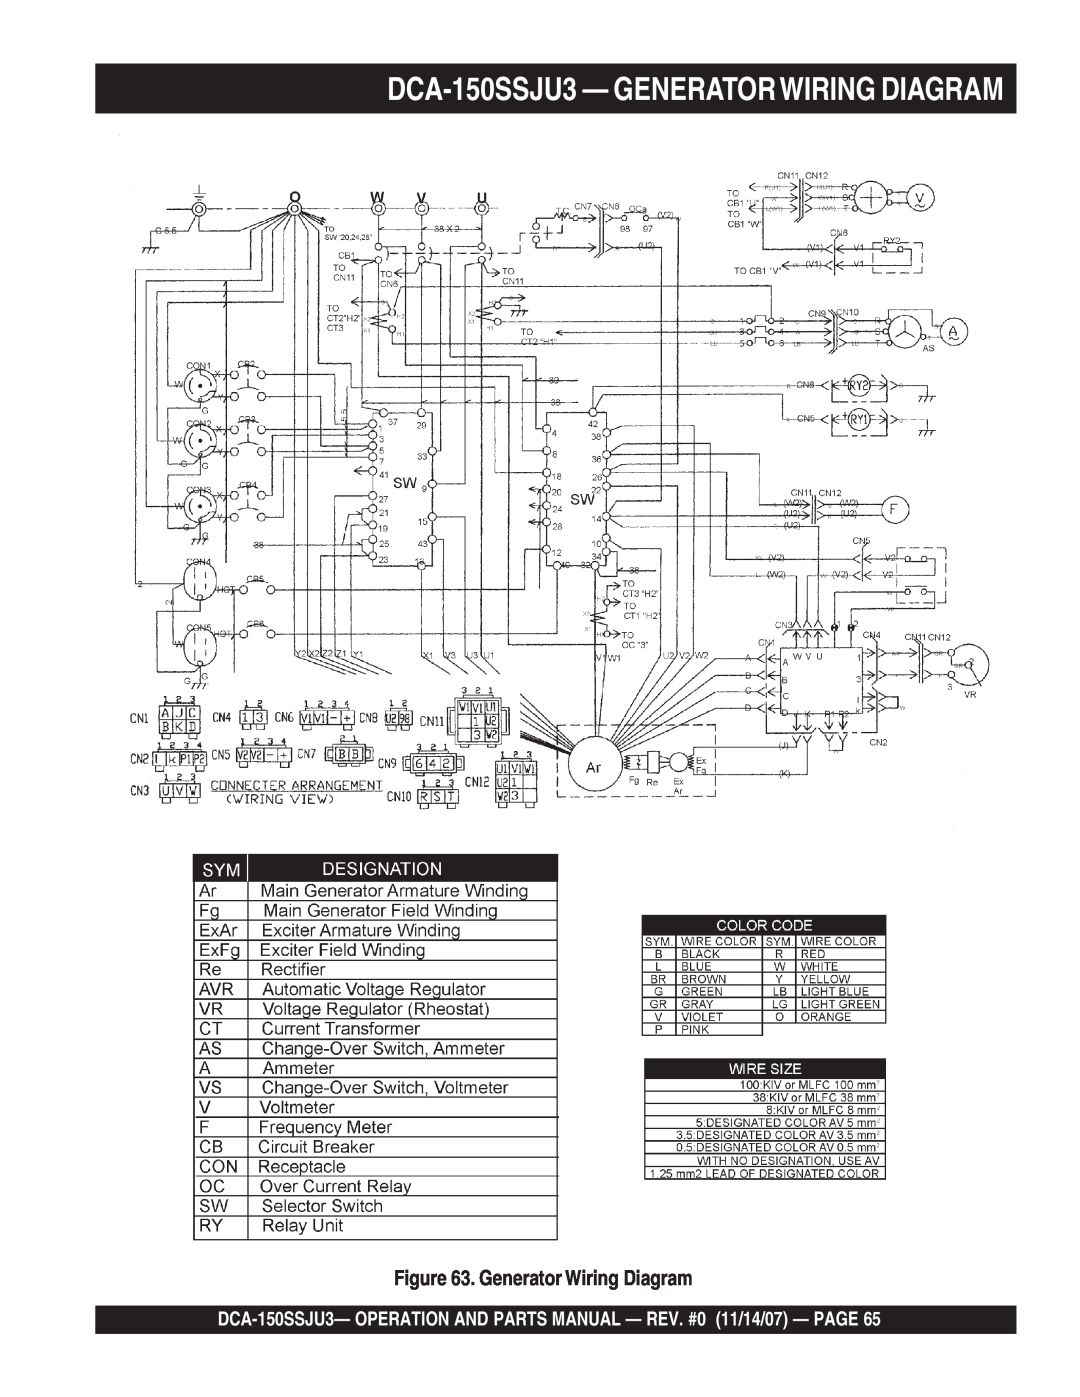 Multiquip operation manual DCA-150SSJU3— GENERATORWIRING DIAGRAM, Generator Wiring Diagram 